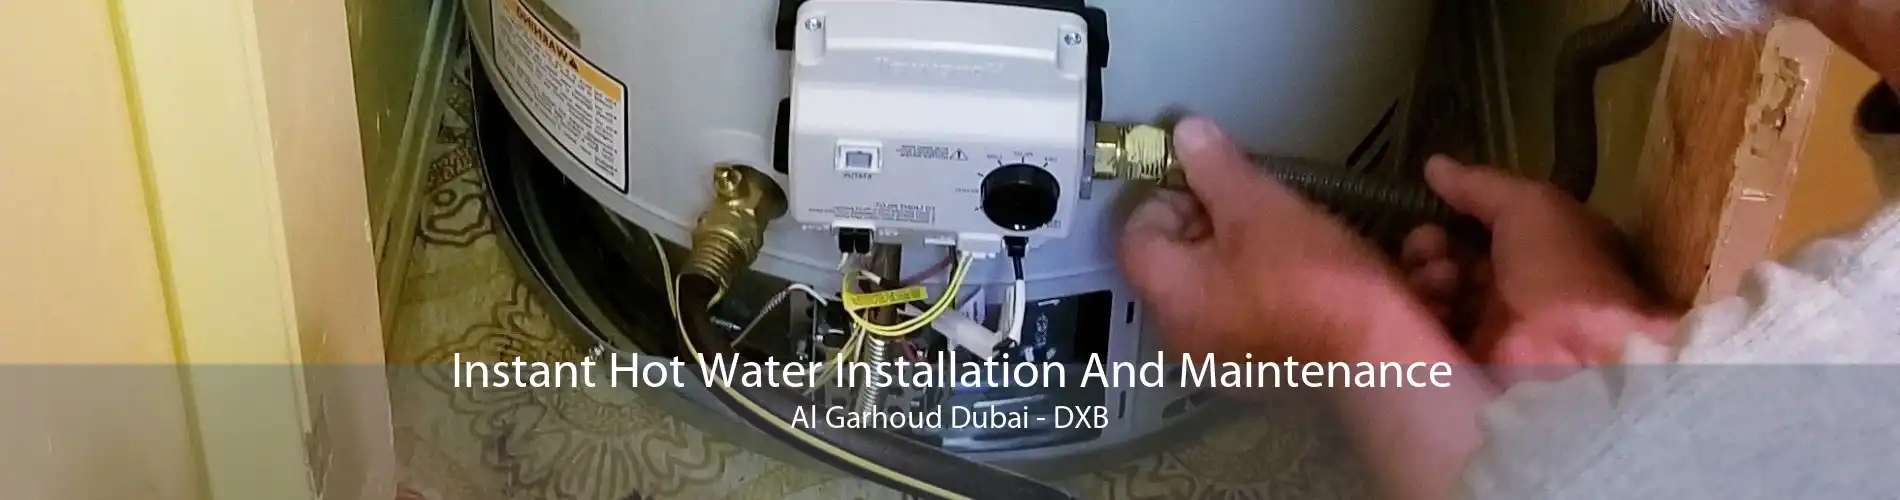 Instant Hot Water Installation And Maintenance Al Garhoud Dubai - DXB